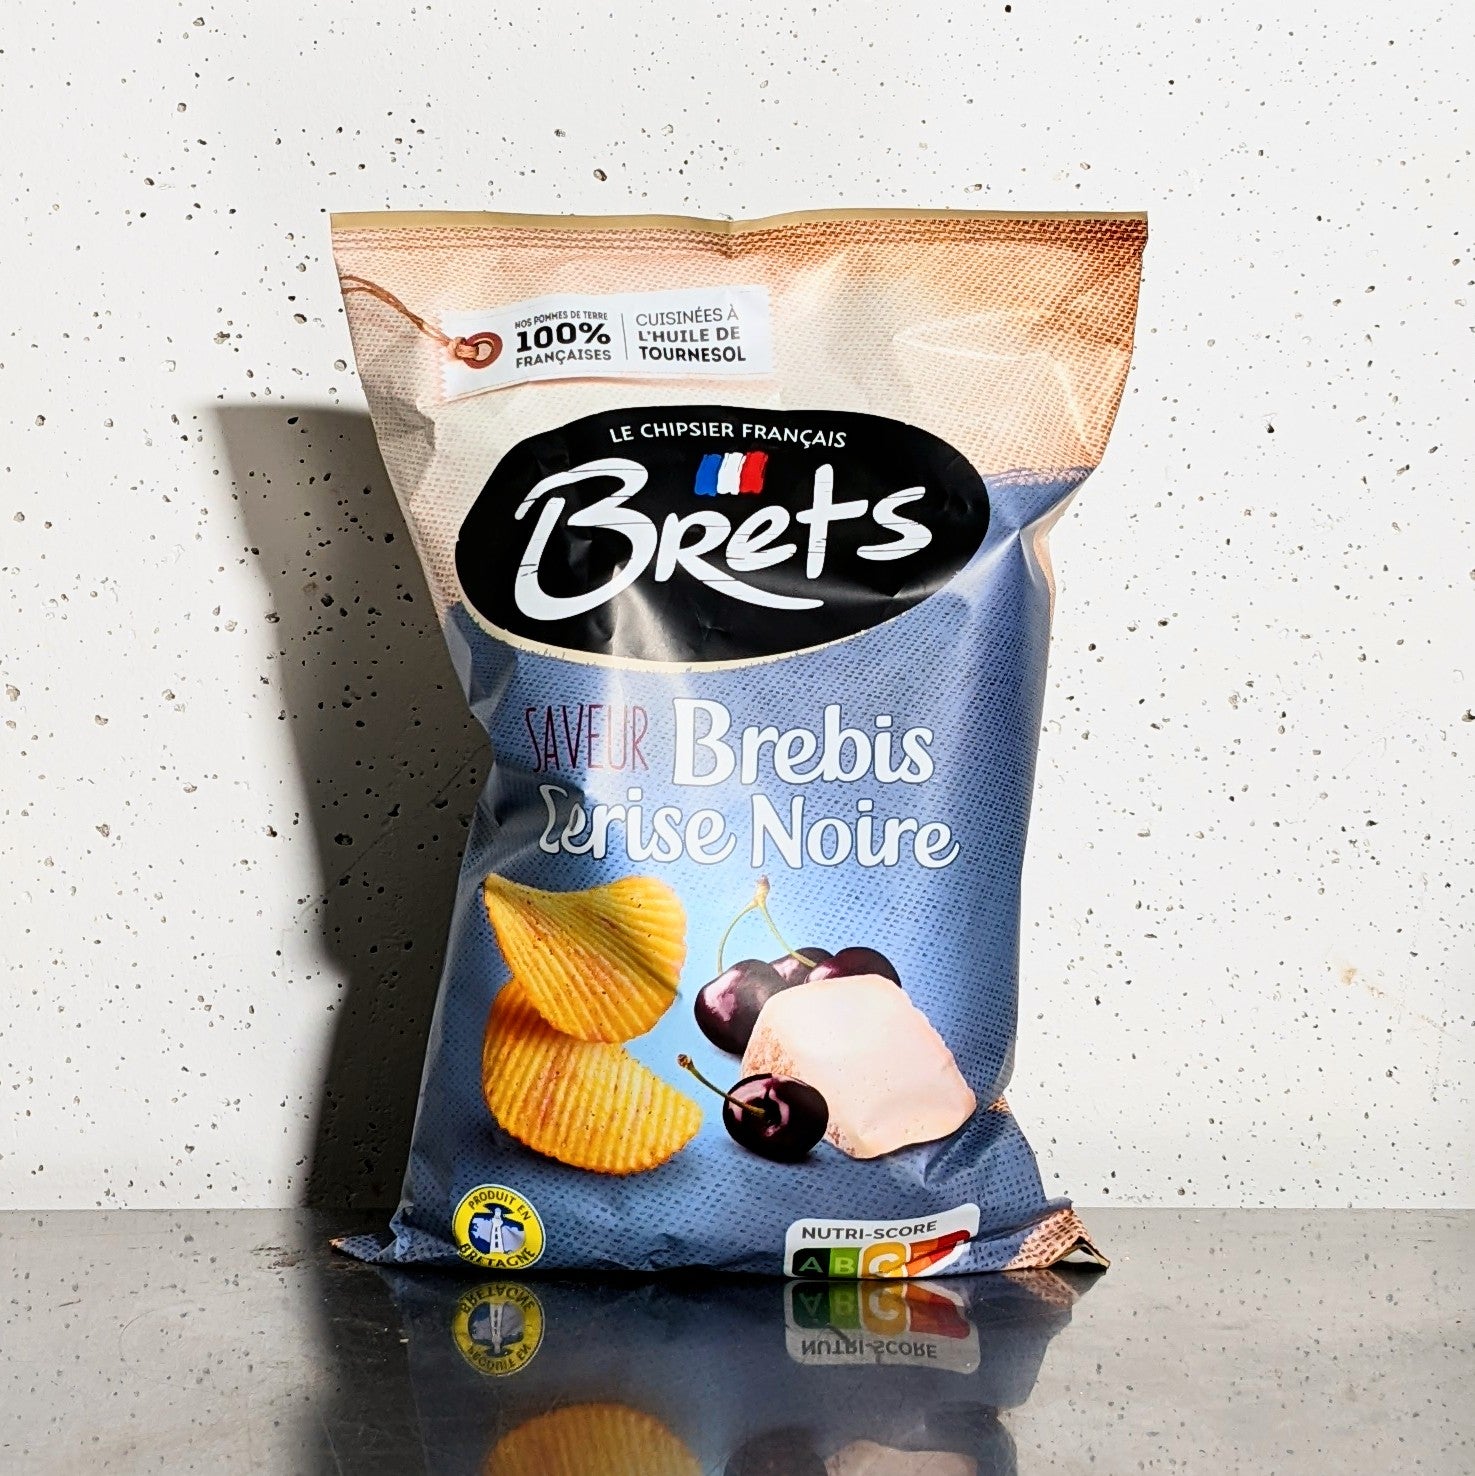 Brets Potato Chips Fresh cheese and fine herbs 4.4oz/125g